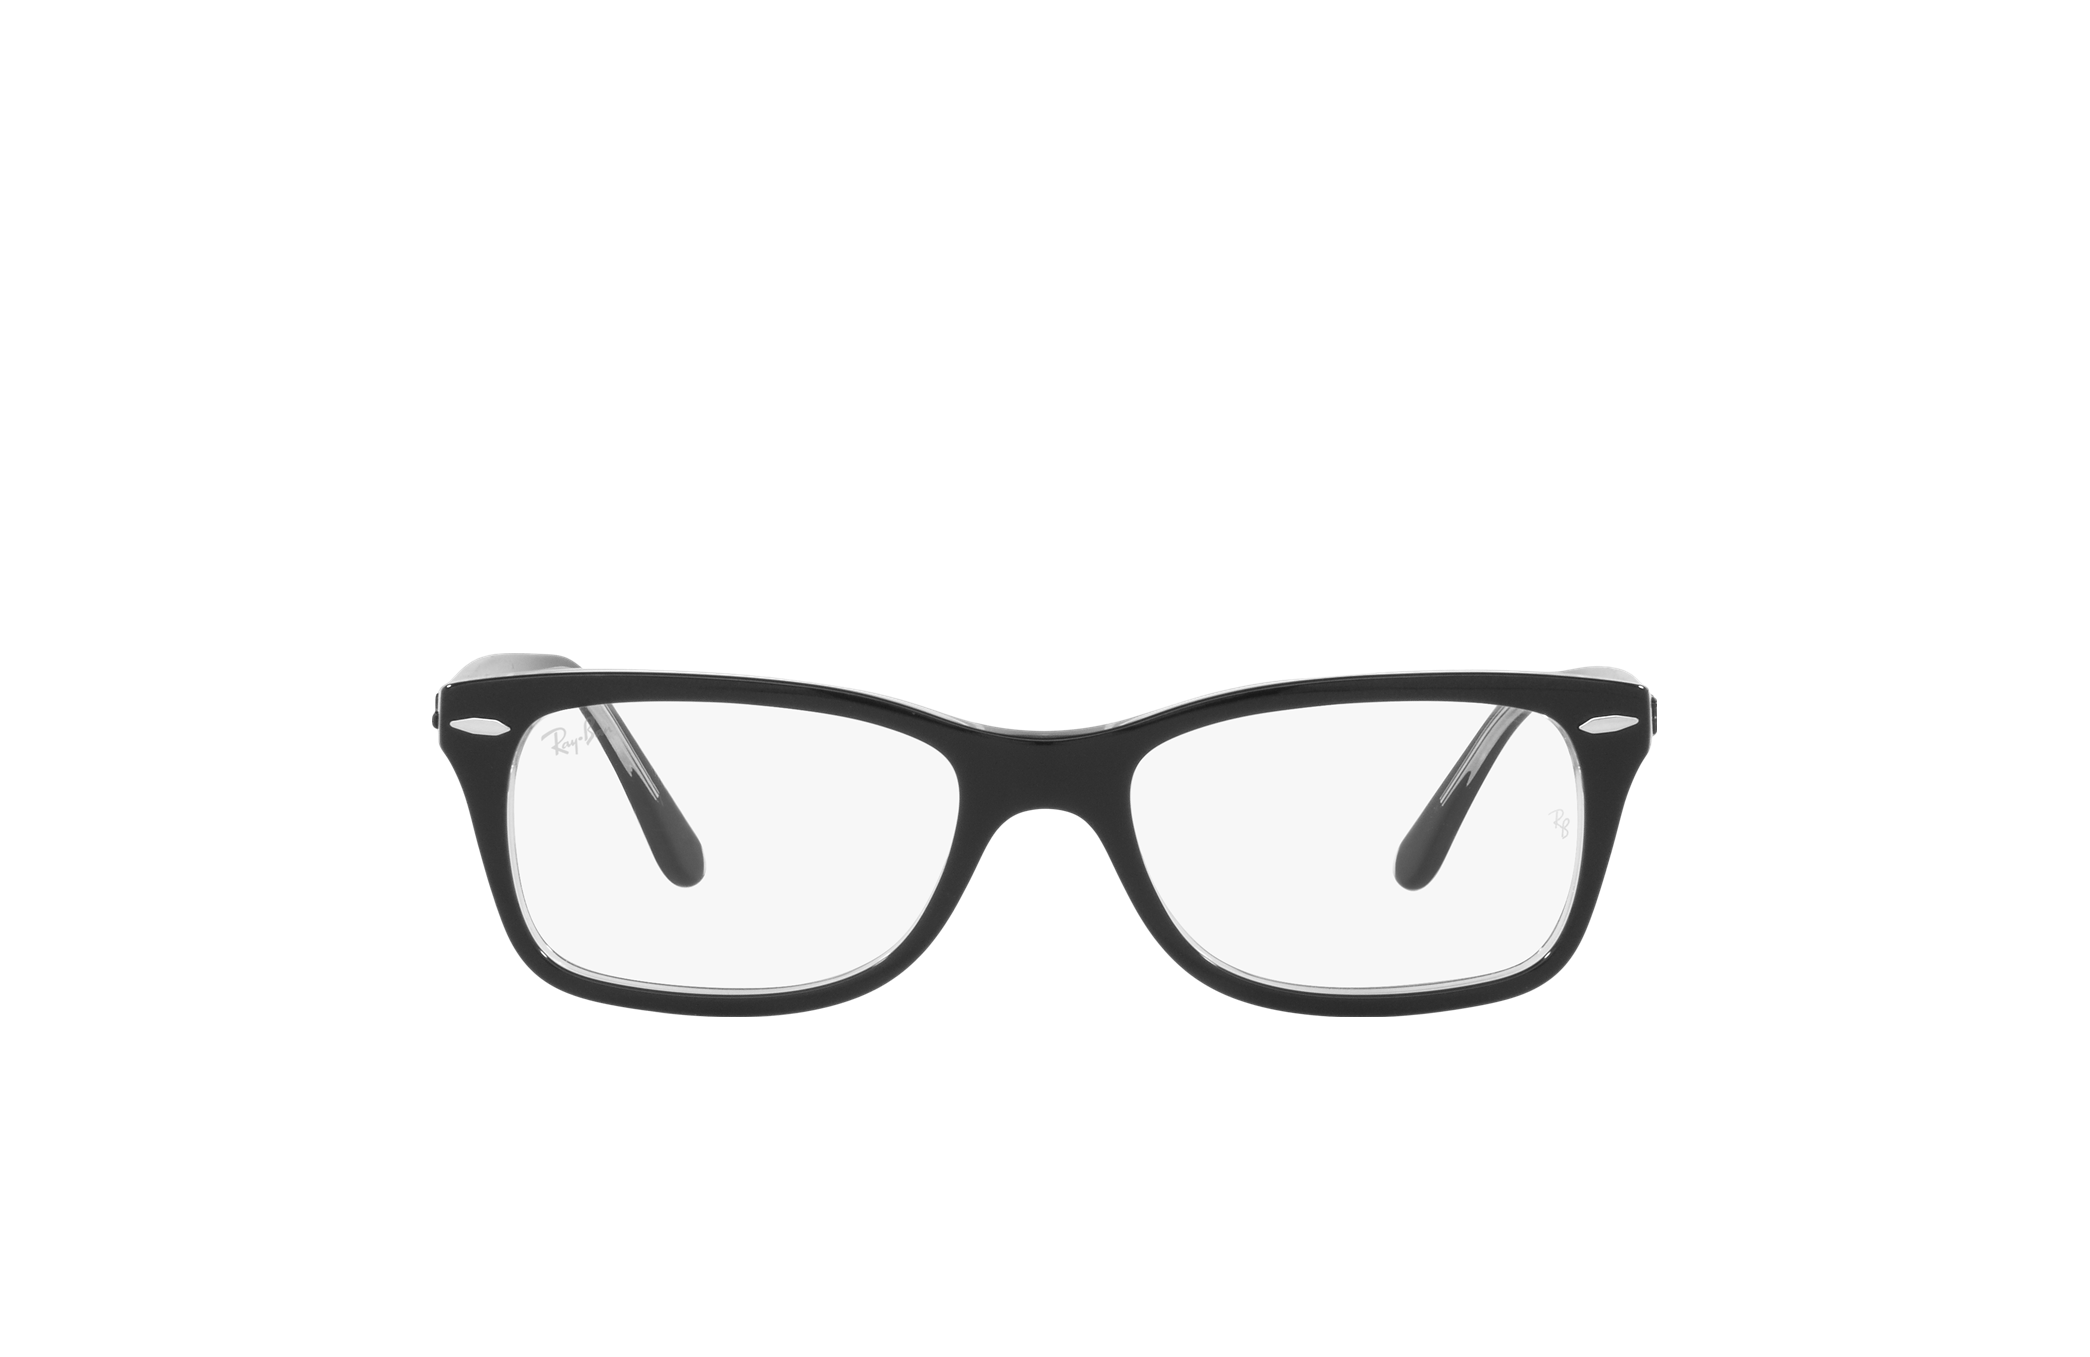 Rb5428 Optics Eyeglasses with Black On Transparent Frame - RB5428F | Ray-Ban®  US